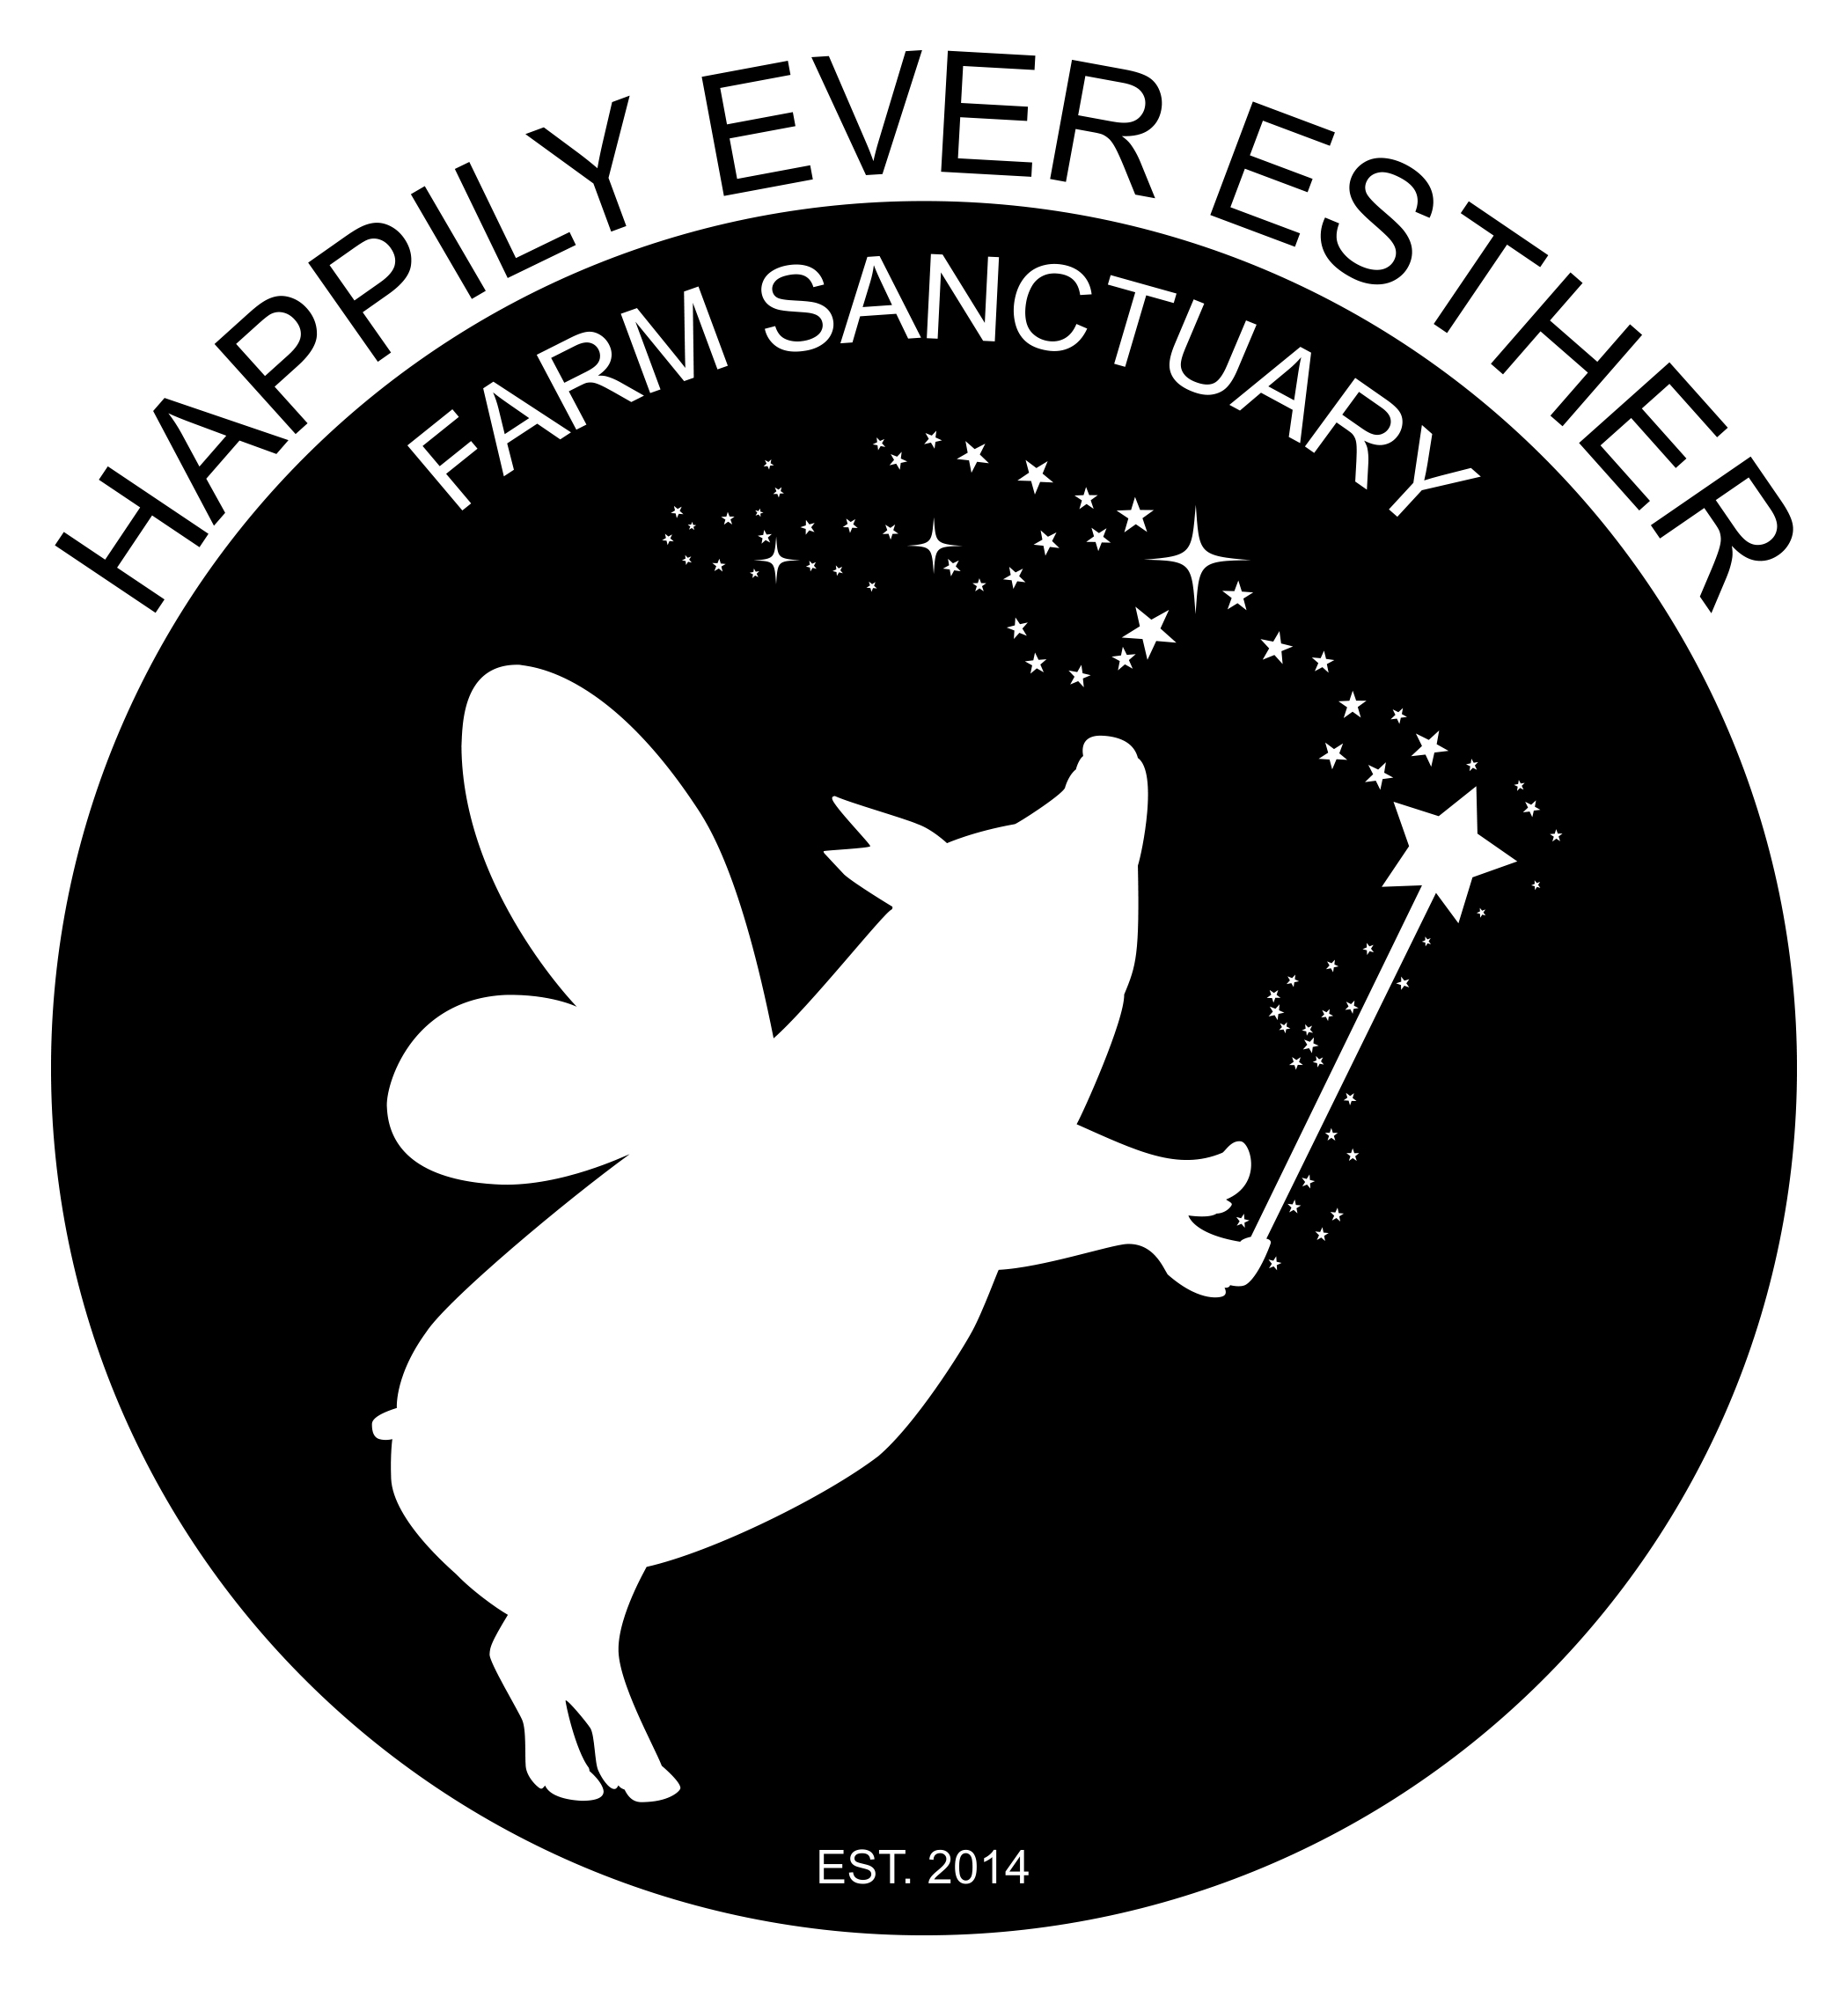 Happily Ever Esther Farm Sanctuary logo